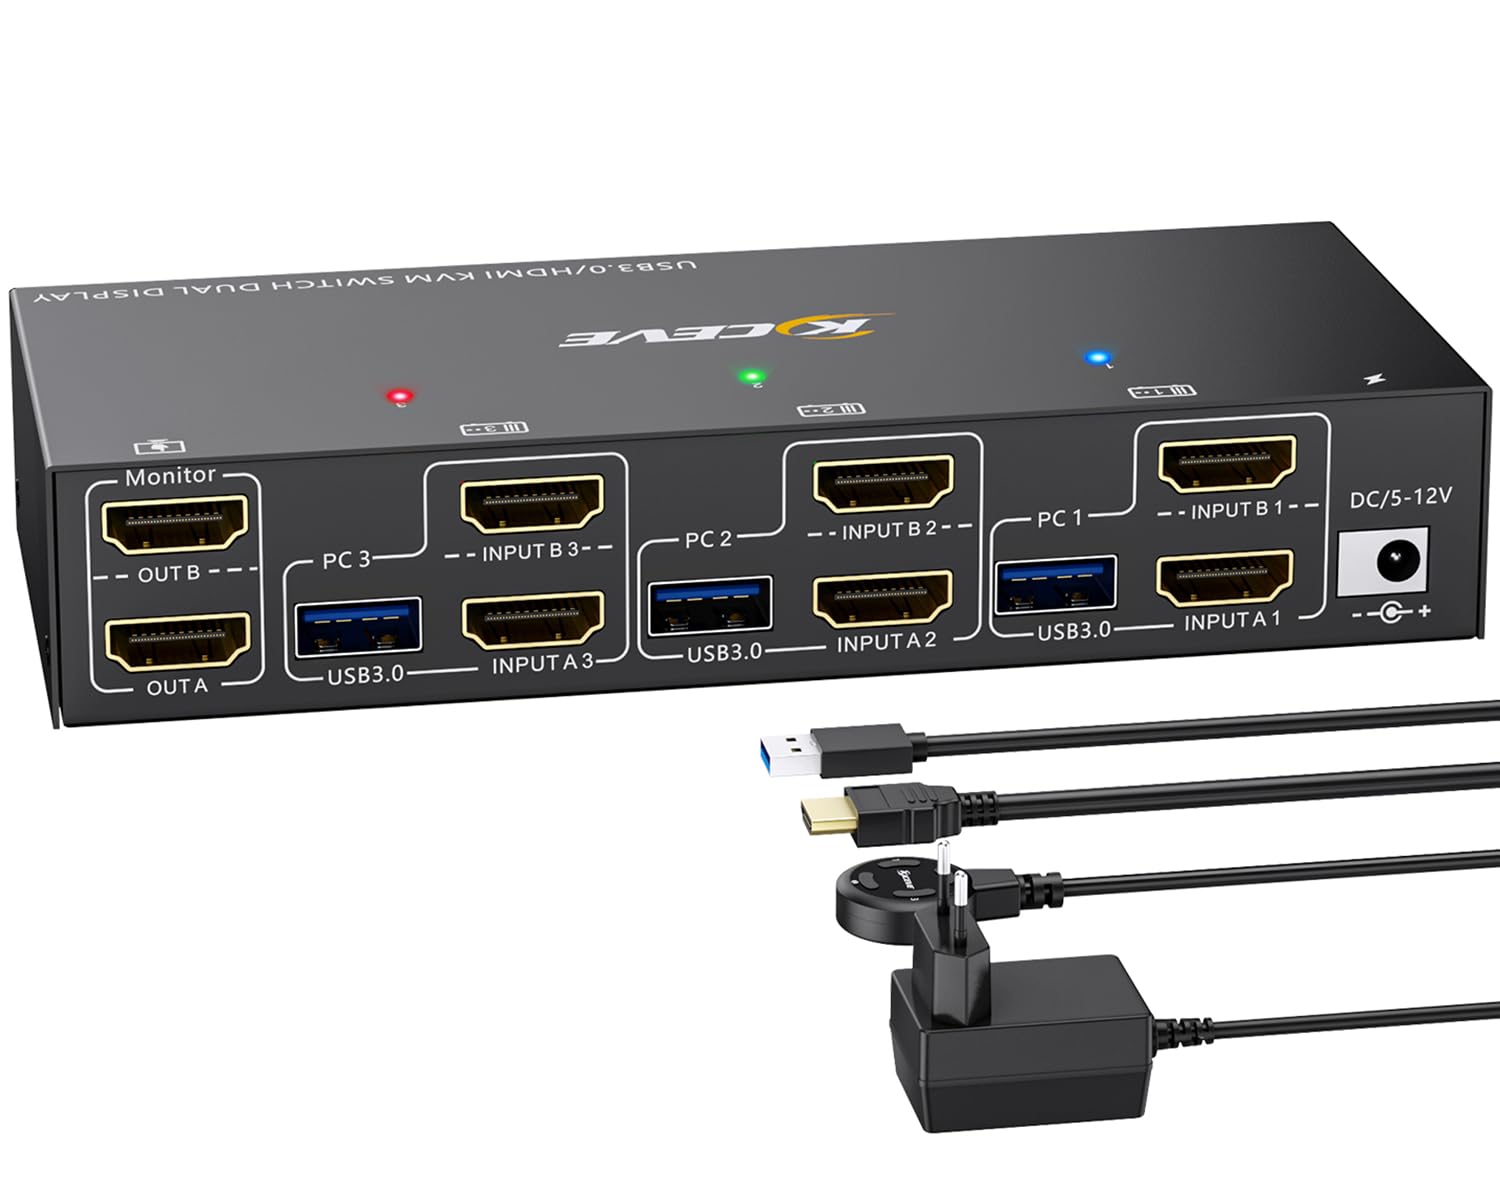 HDMI USB 3.0 KVM Switch 3 PC 2 Monitore 4K@60Hz,EDID Emulator, Dual Monitor KVM Switch HDMI mit 4 USB 3.0 Ports für 2 PC/Laptops, Support Extended & Copy Mode, mit USB-Kabel und Desktop Controller